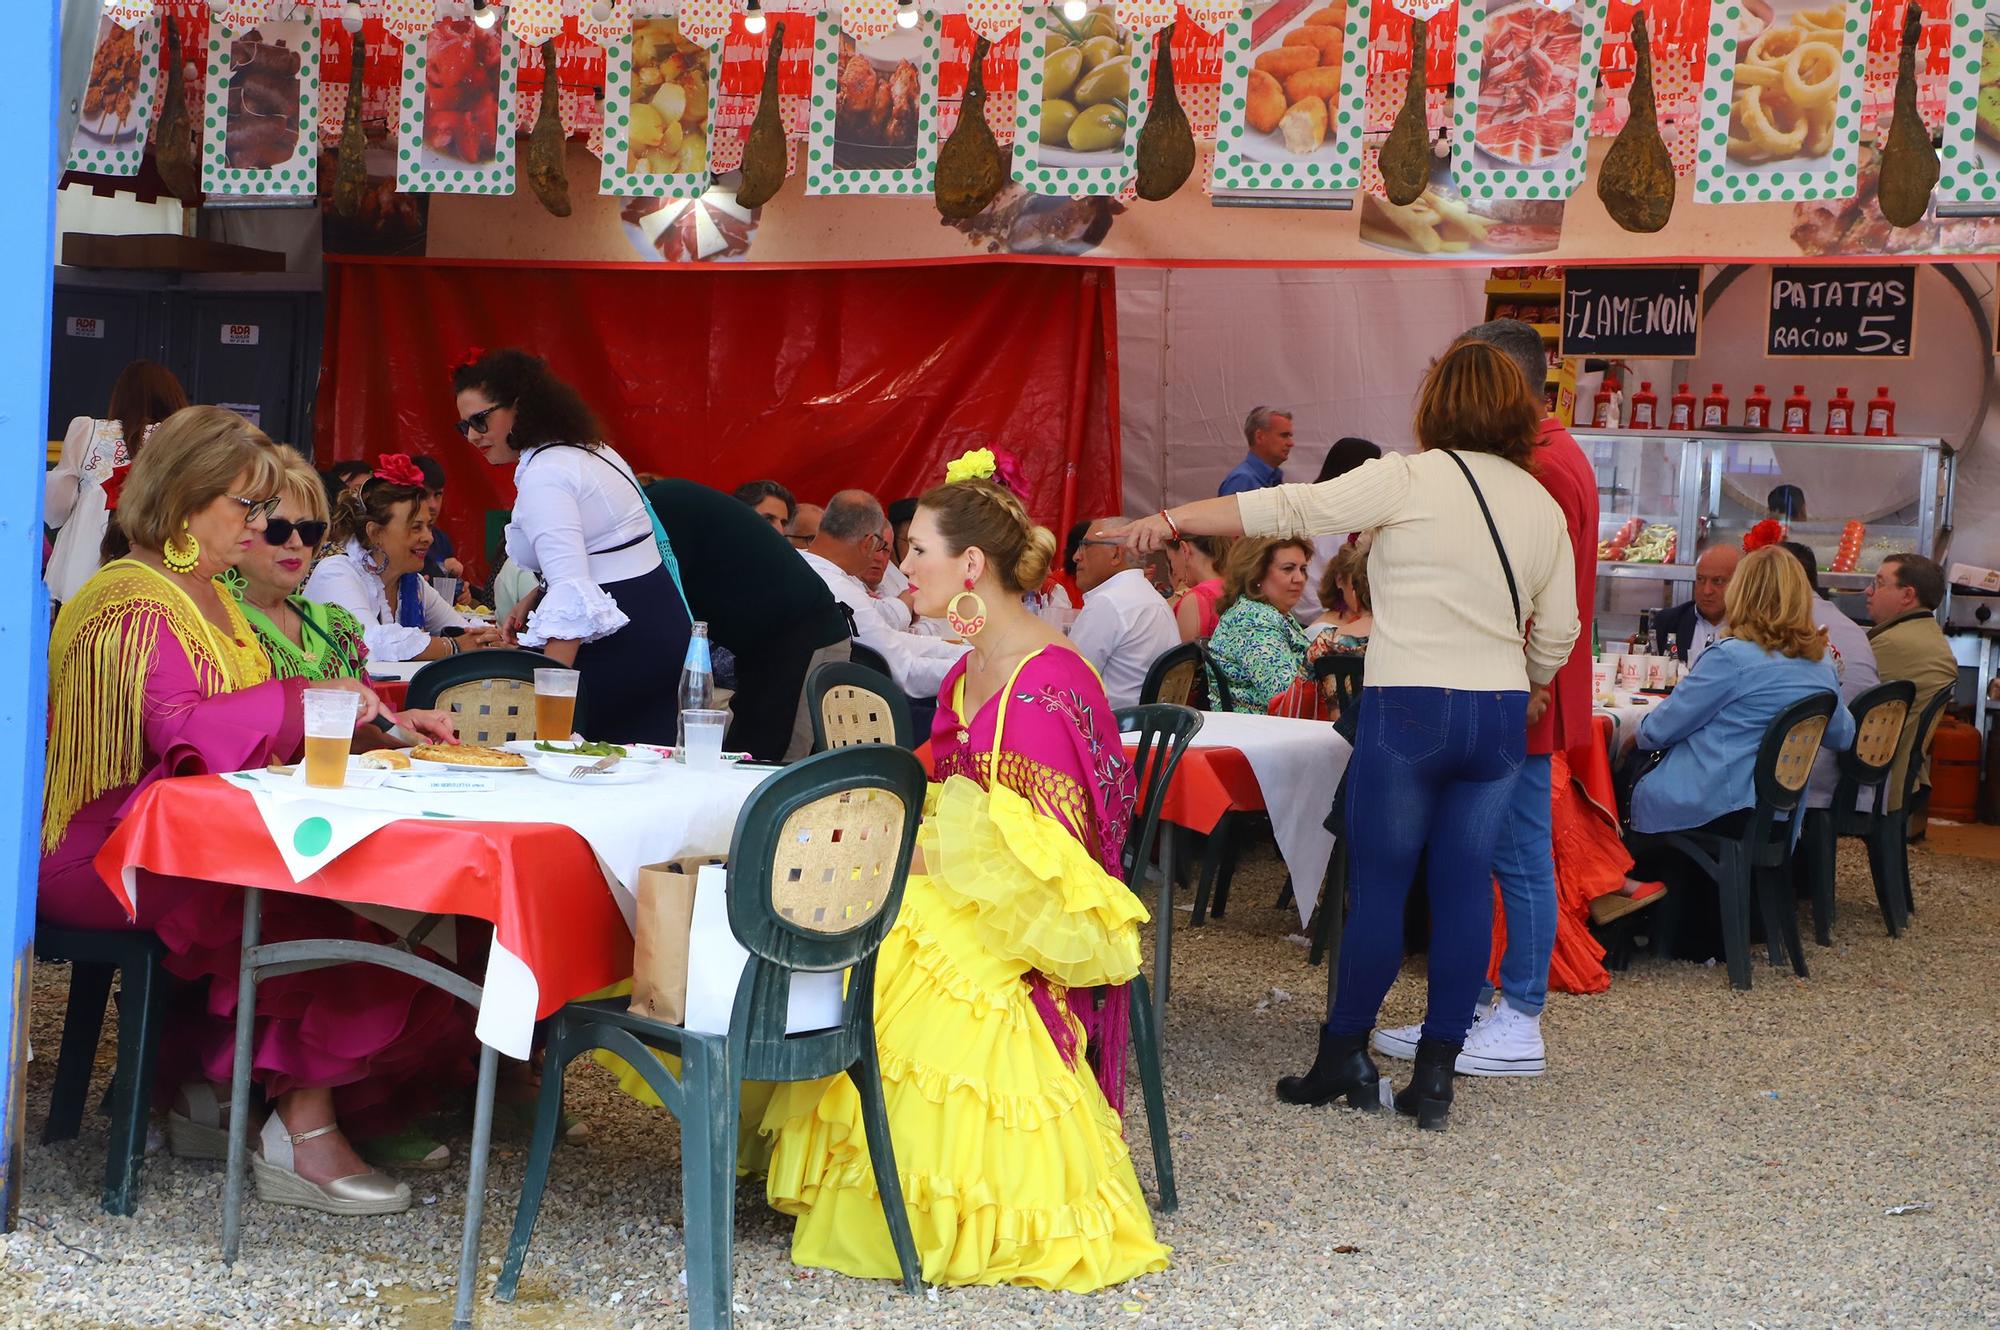 El domingo de l Feria de Córdoba en imágenes